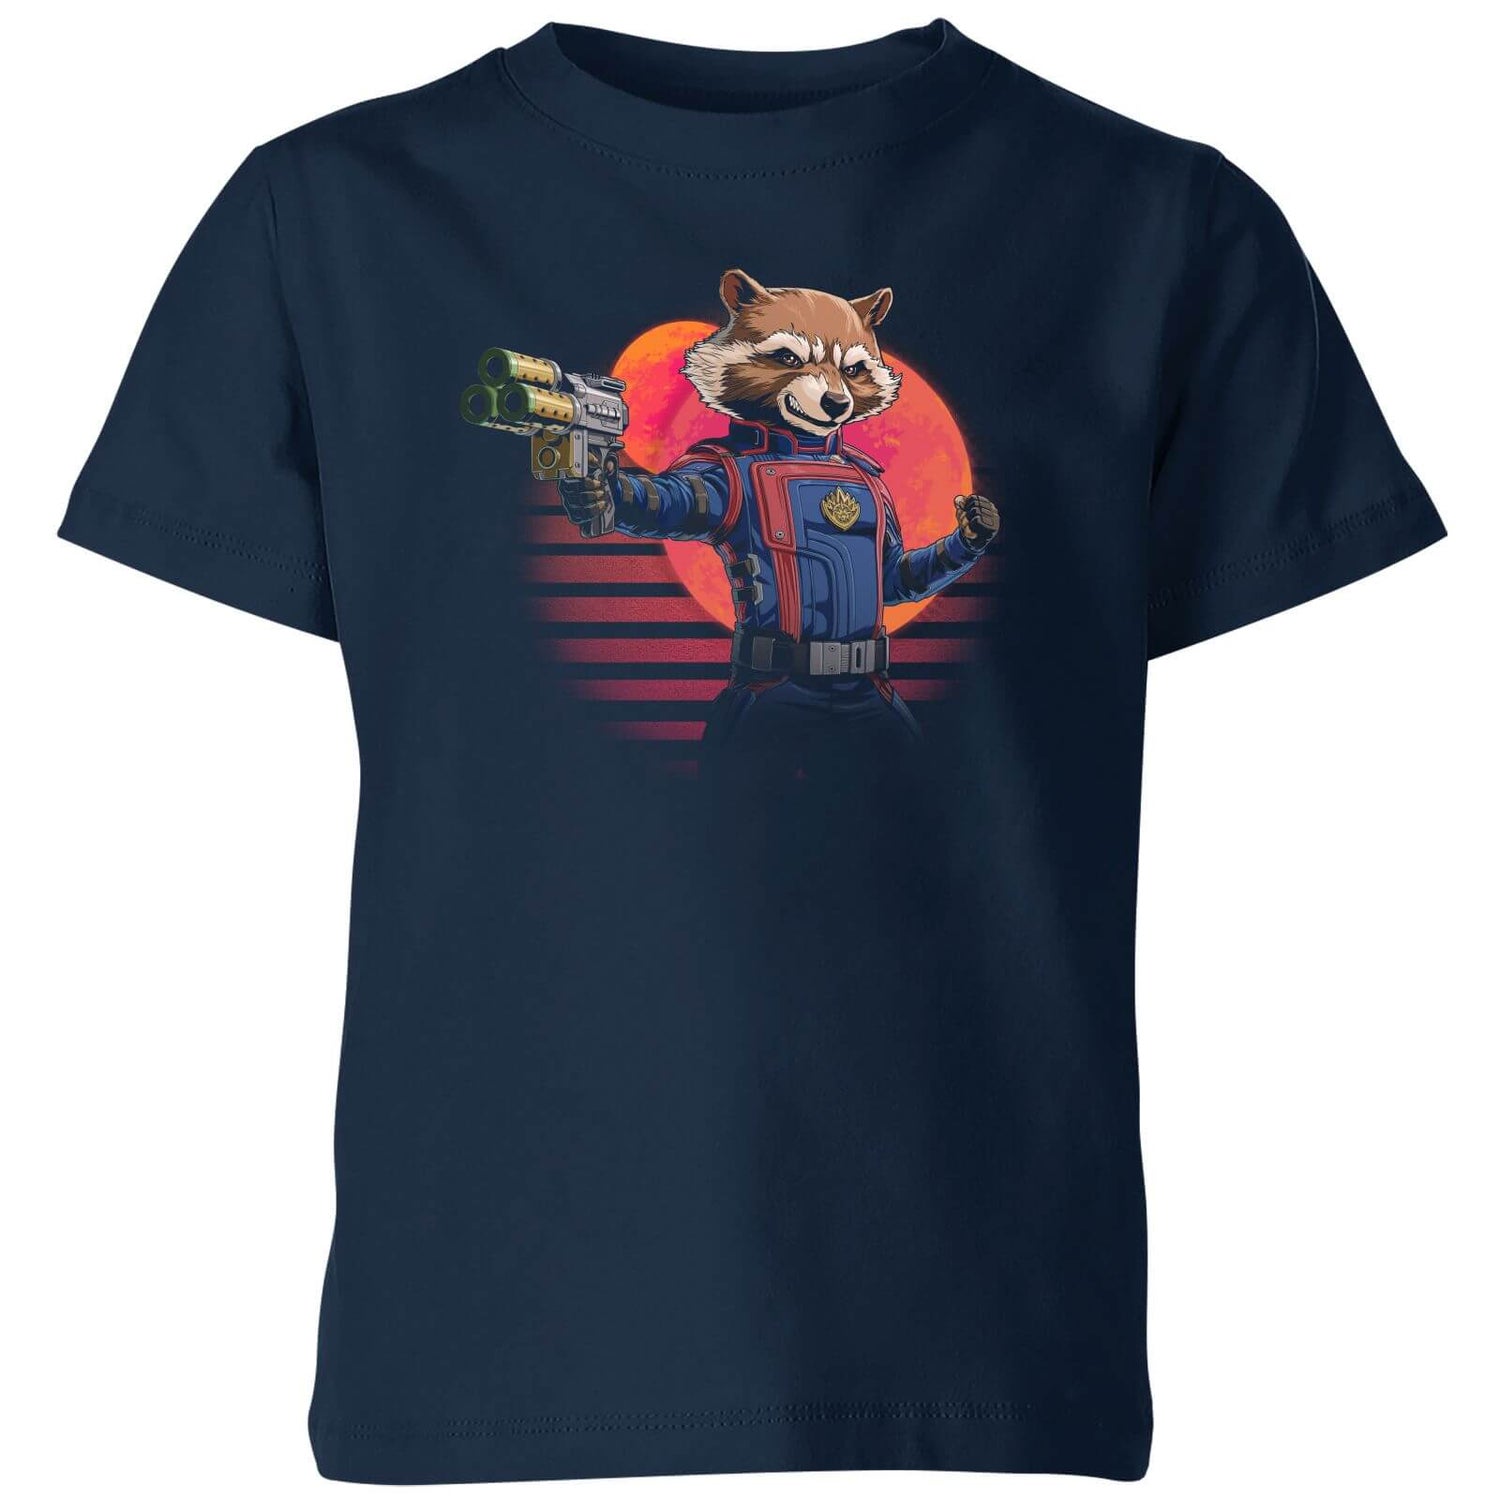 Guardians of the Galaxy Retro Rocket Raccoon Kids' T-Shirt - Navy